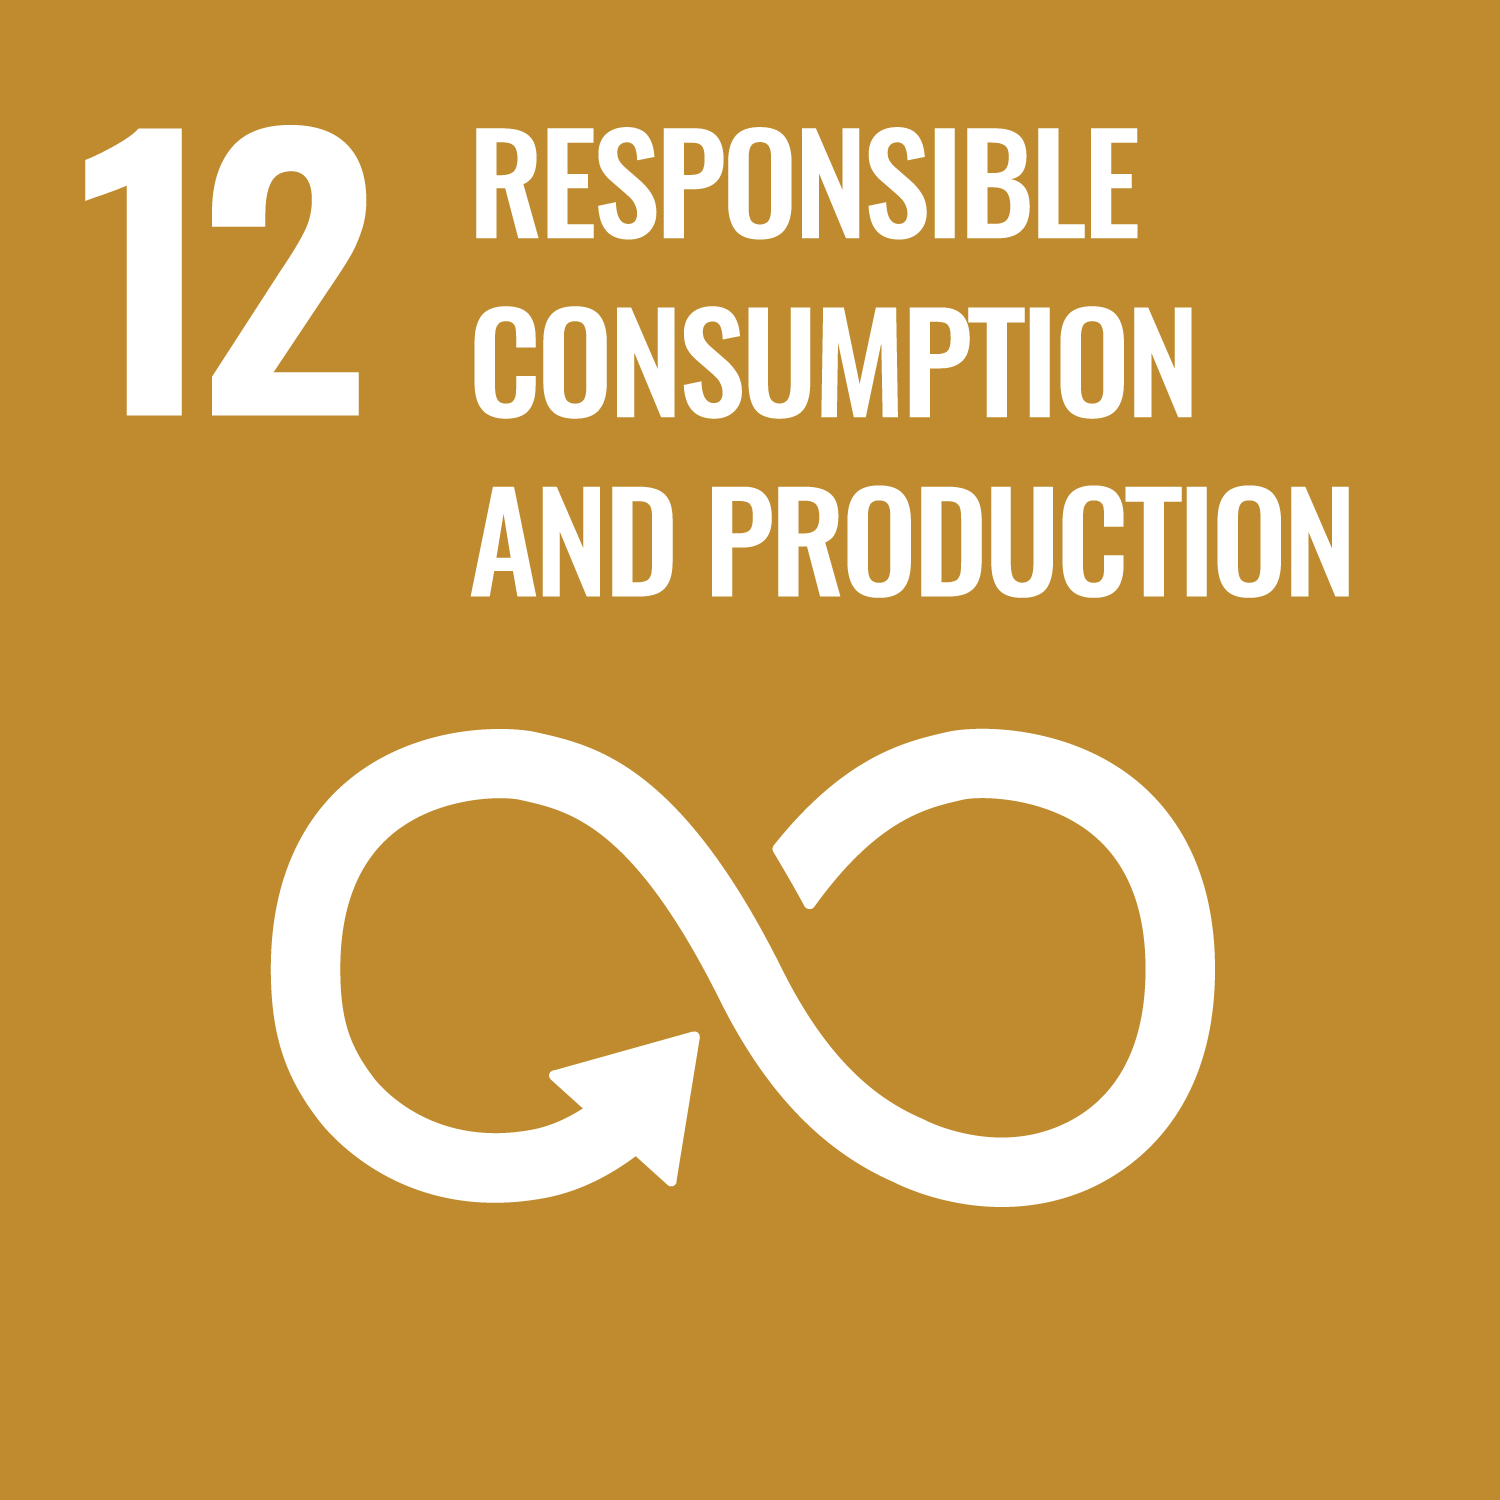 Sustainability Effort Goal 12